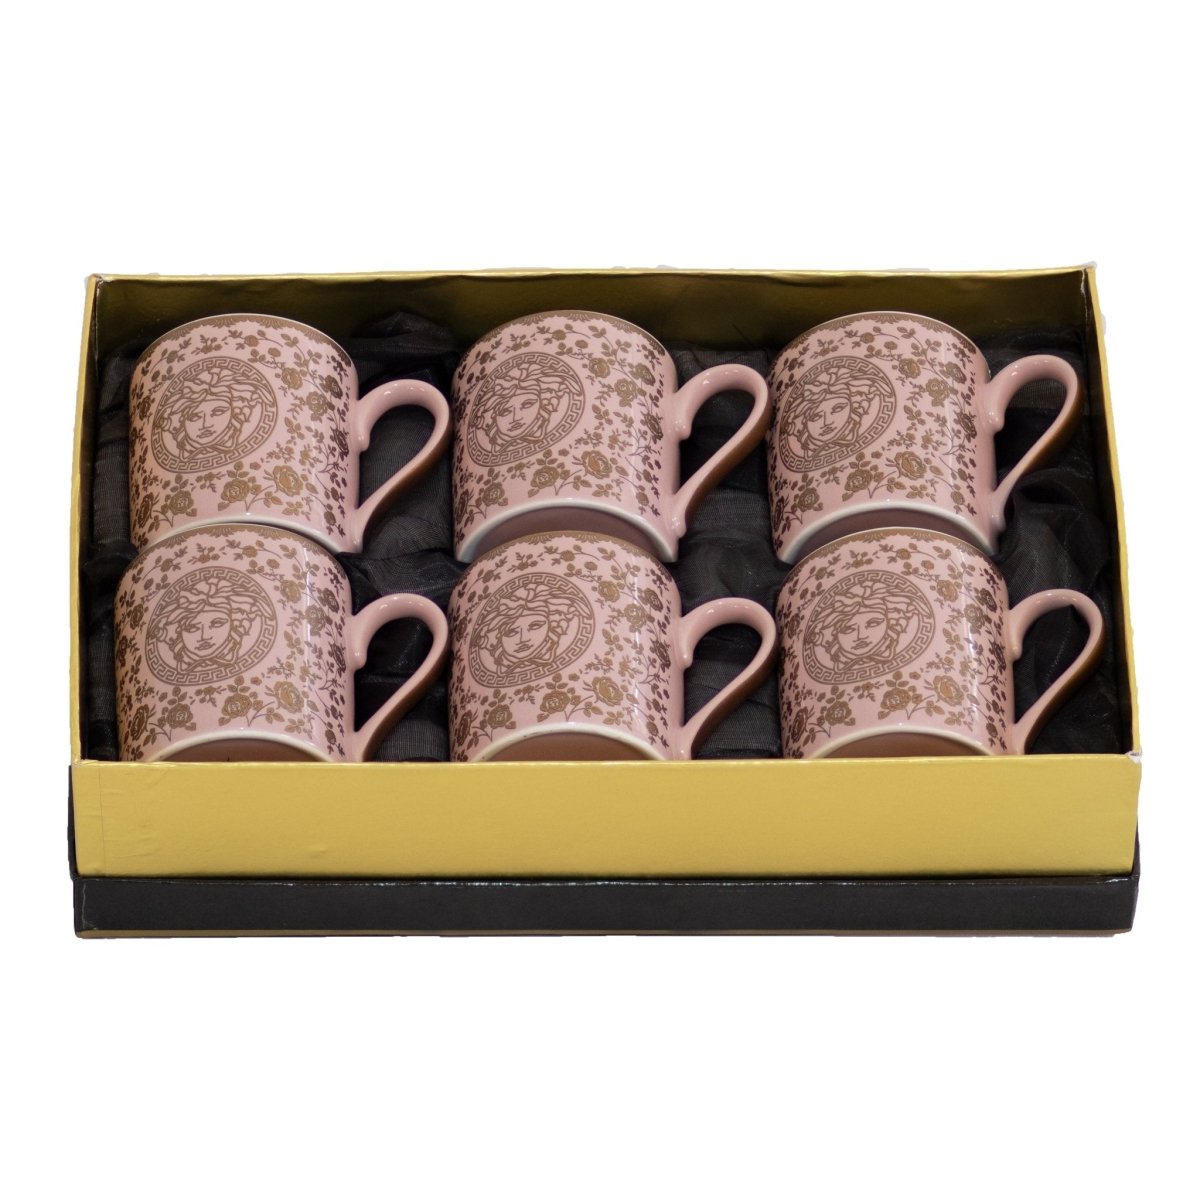 Premium Bone China Pink and Gold Design - 6 Pc Mug Set Serves as Tea Cups, Coffee Cups, Tea Mugs, Coffee Mugs - Kezevel